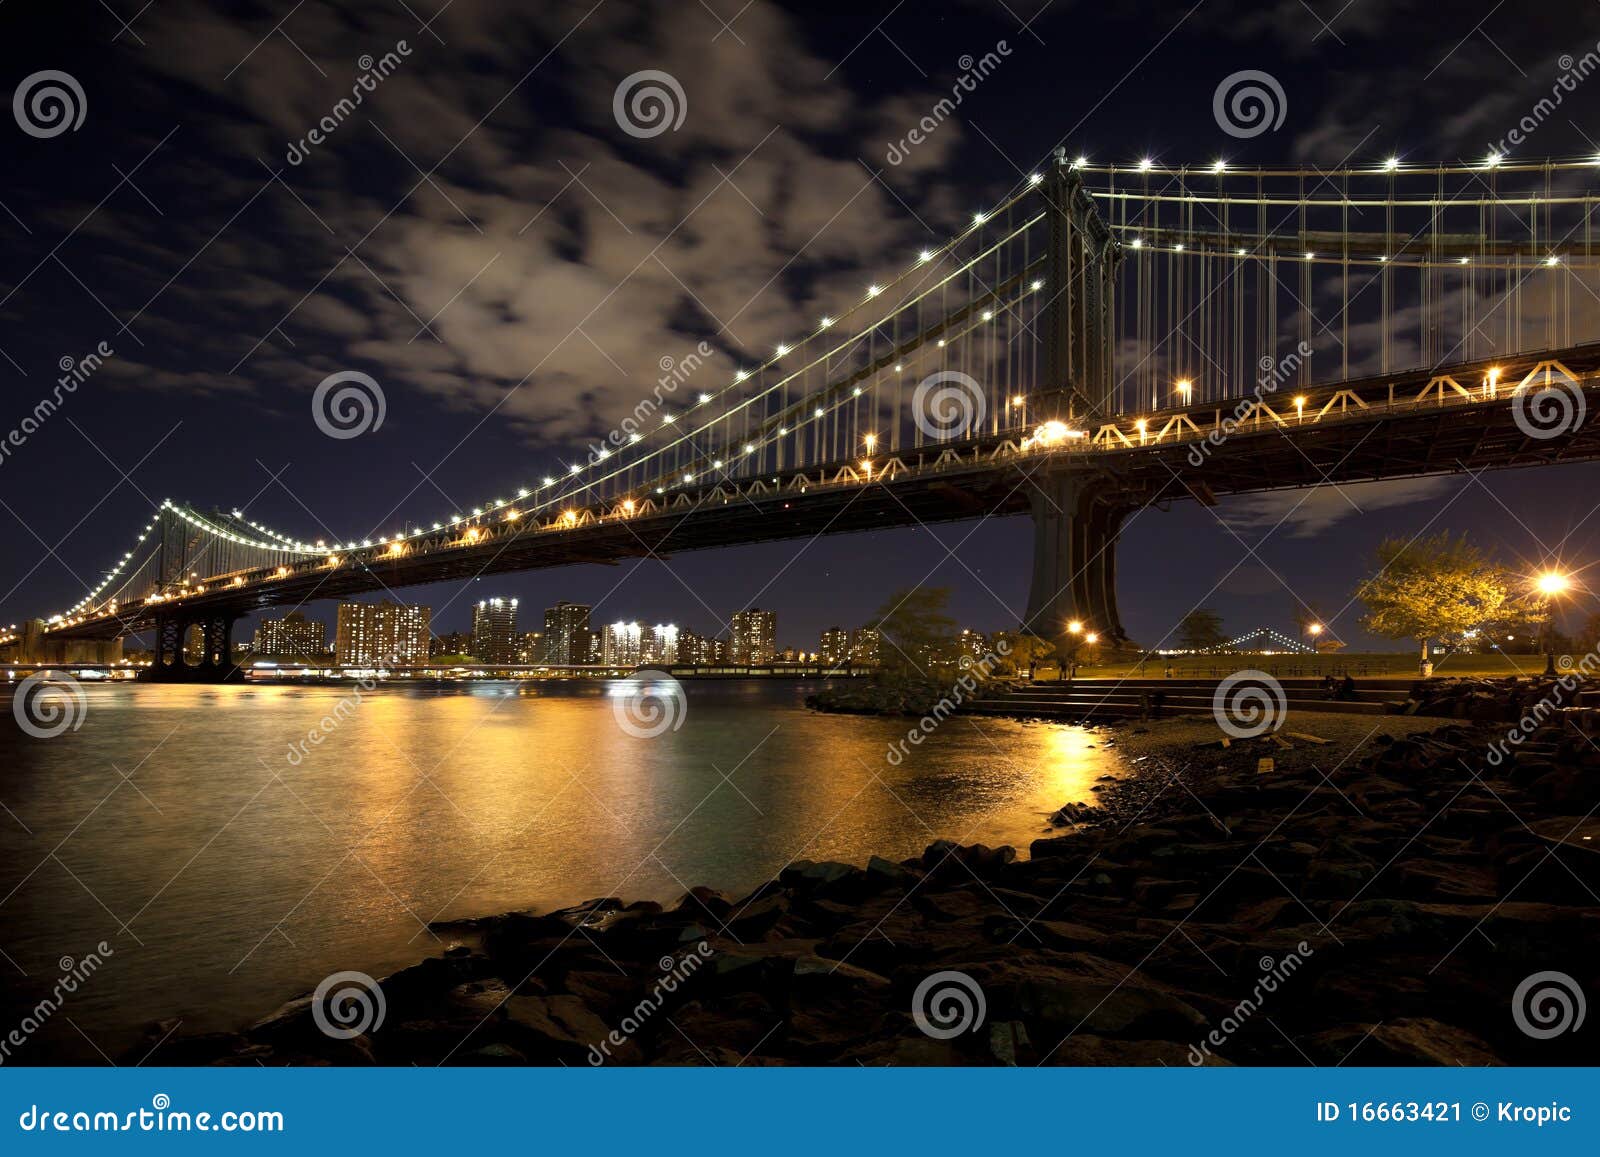 The New York City Skyline W Manhattan Bridge Stock Image - Image of ...